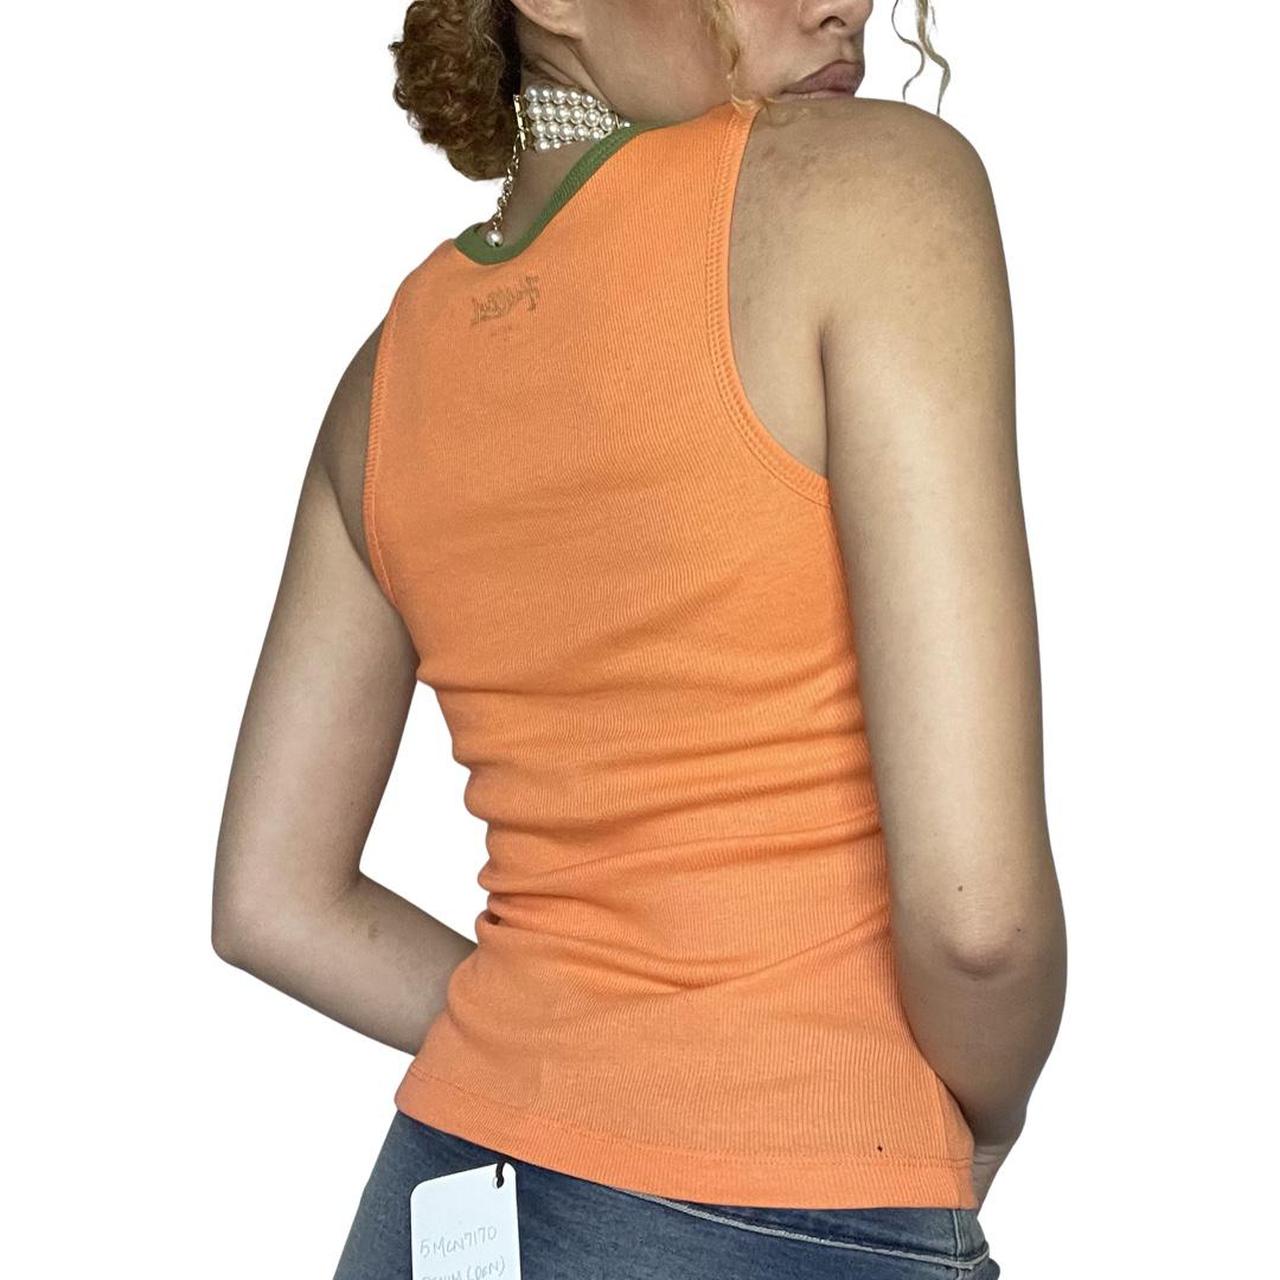 Women's Orange and Green Vests-tanks-camis (2)